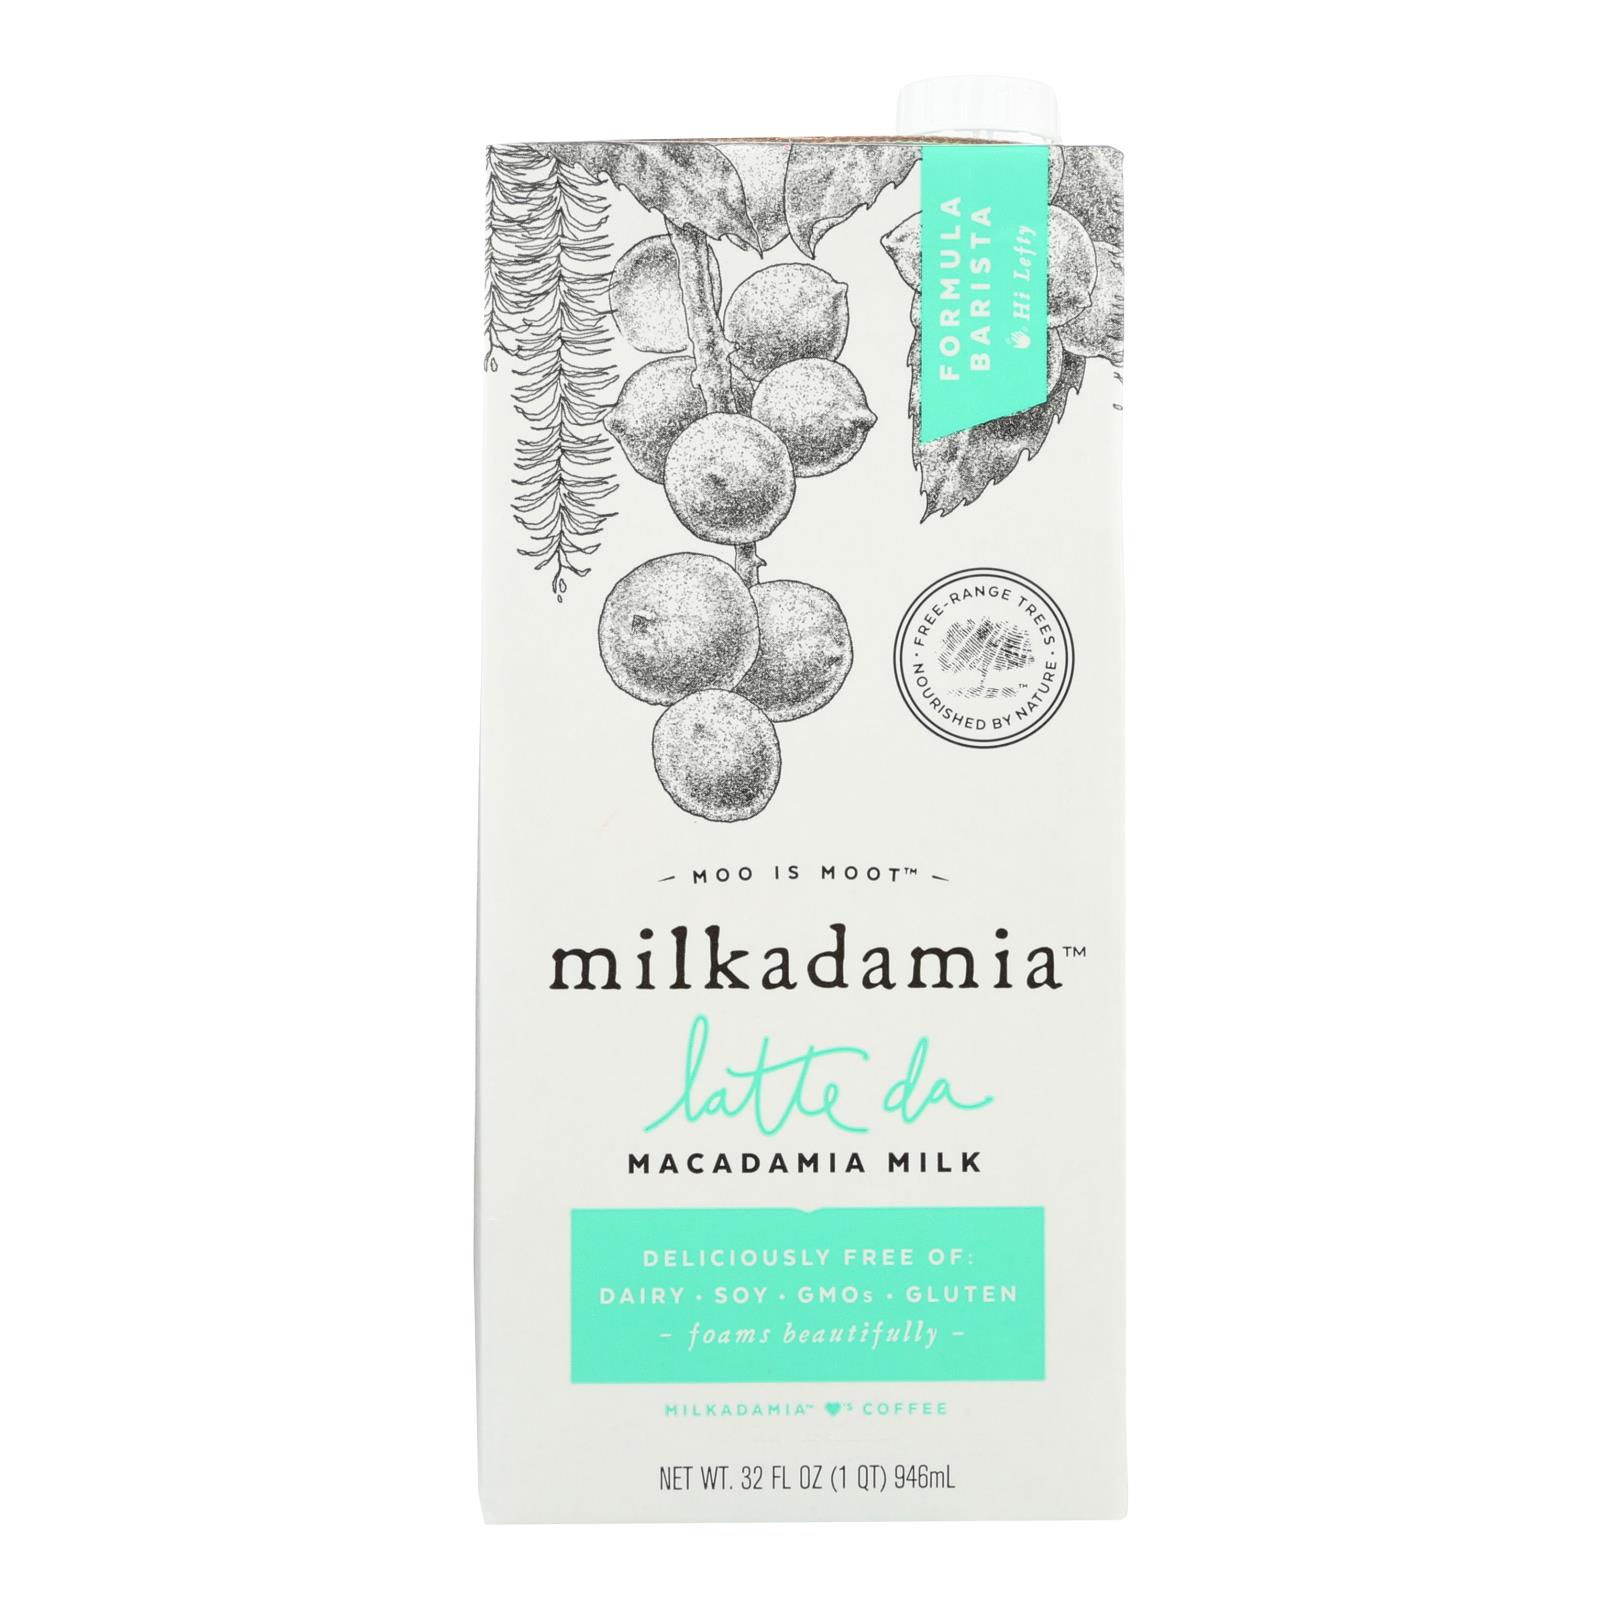 Milkadamia Macadamia Milk In Latte Da Barista - 6개 묶음상품 - 32 FZ